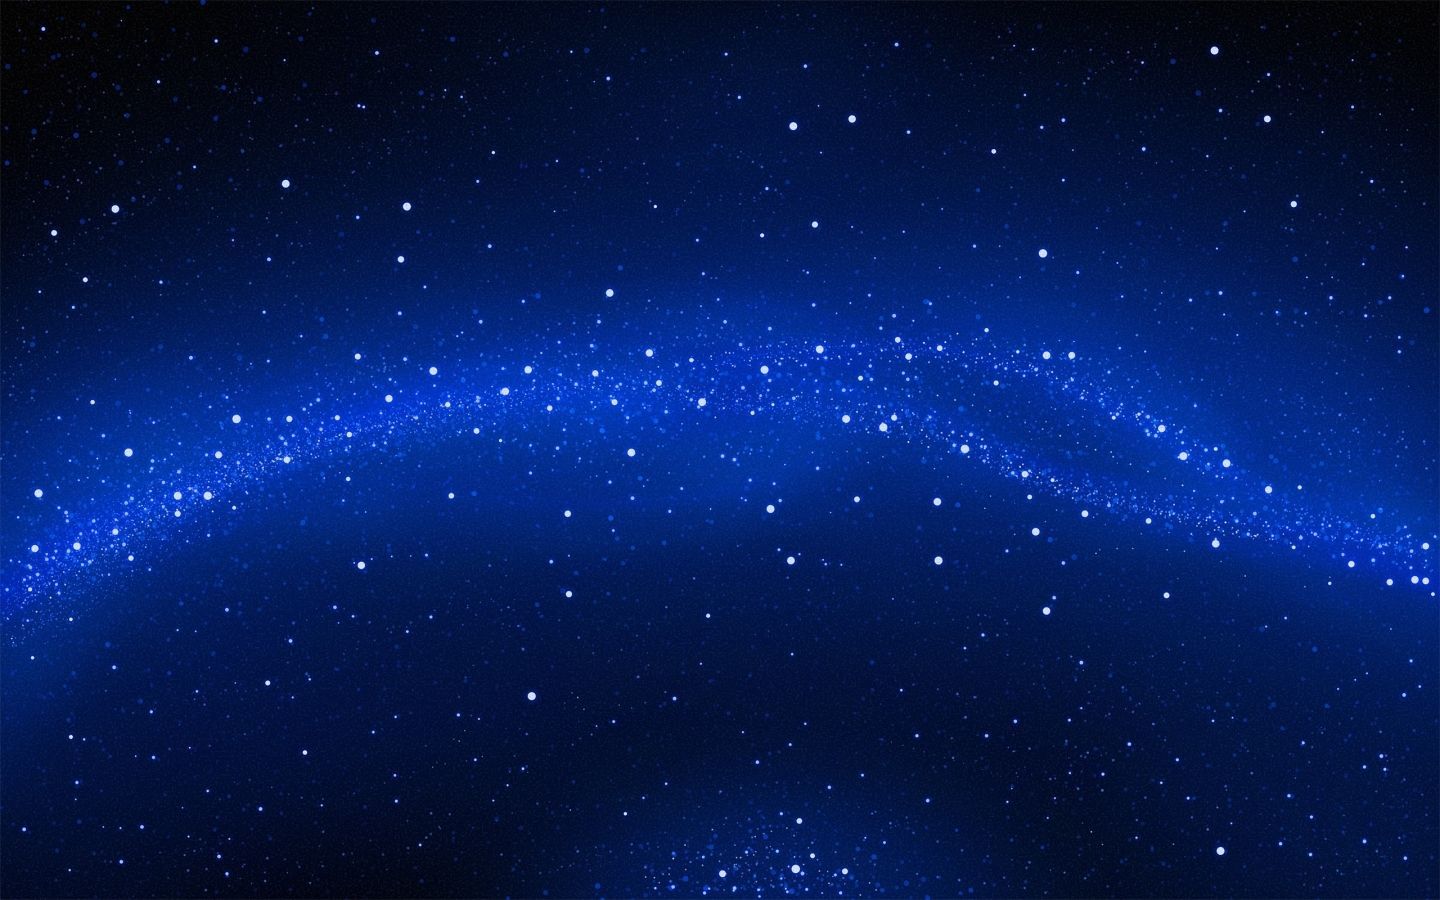 Milky Way Mac Wallpaper Download | Free Mac Wallpapers Download